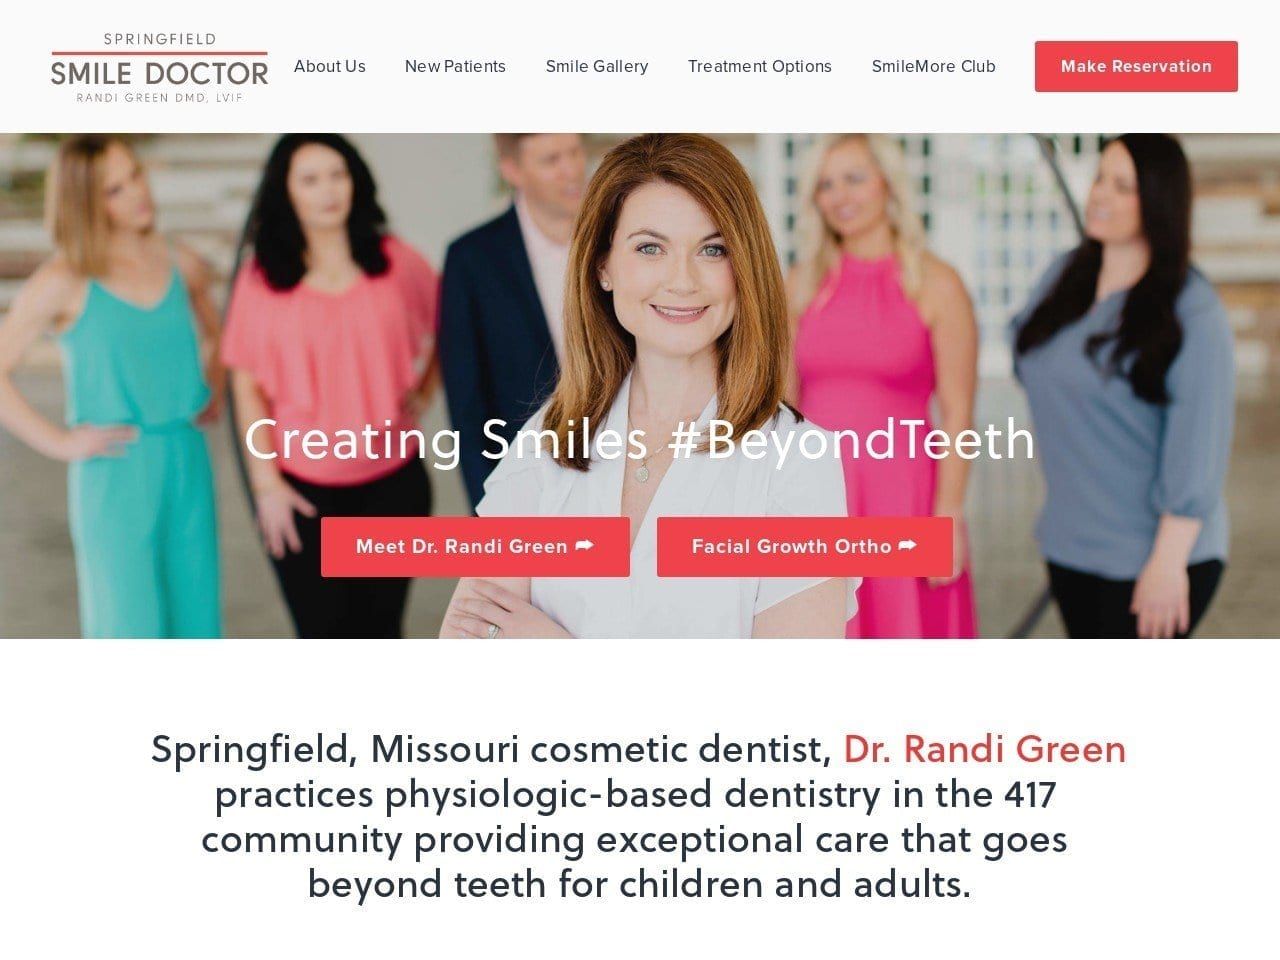 Springfield Smile Doctor Randi Green DMD Website Screenshot from springfieldsmiledoctor.com